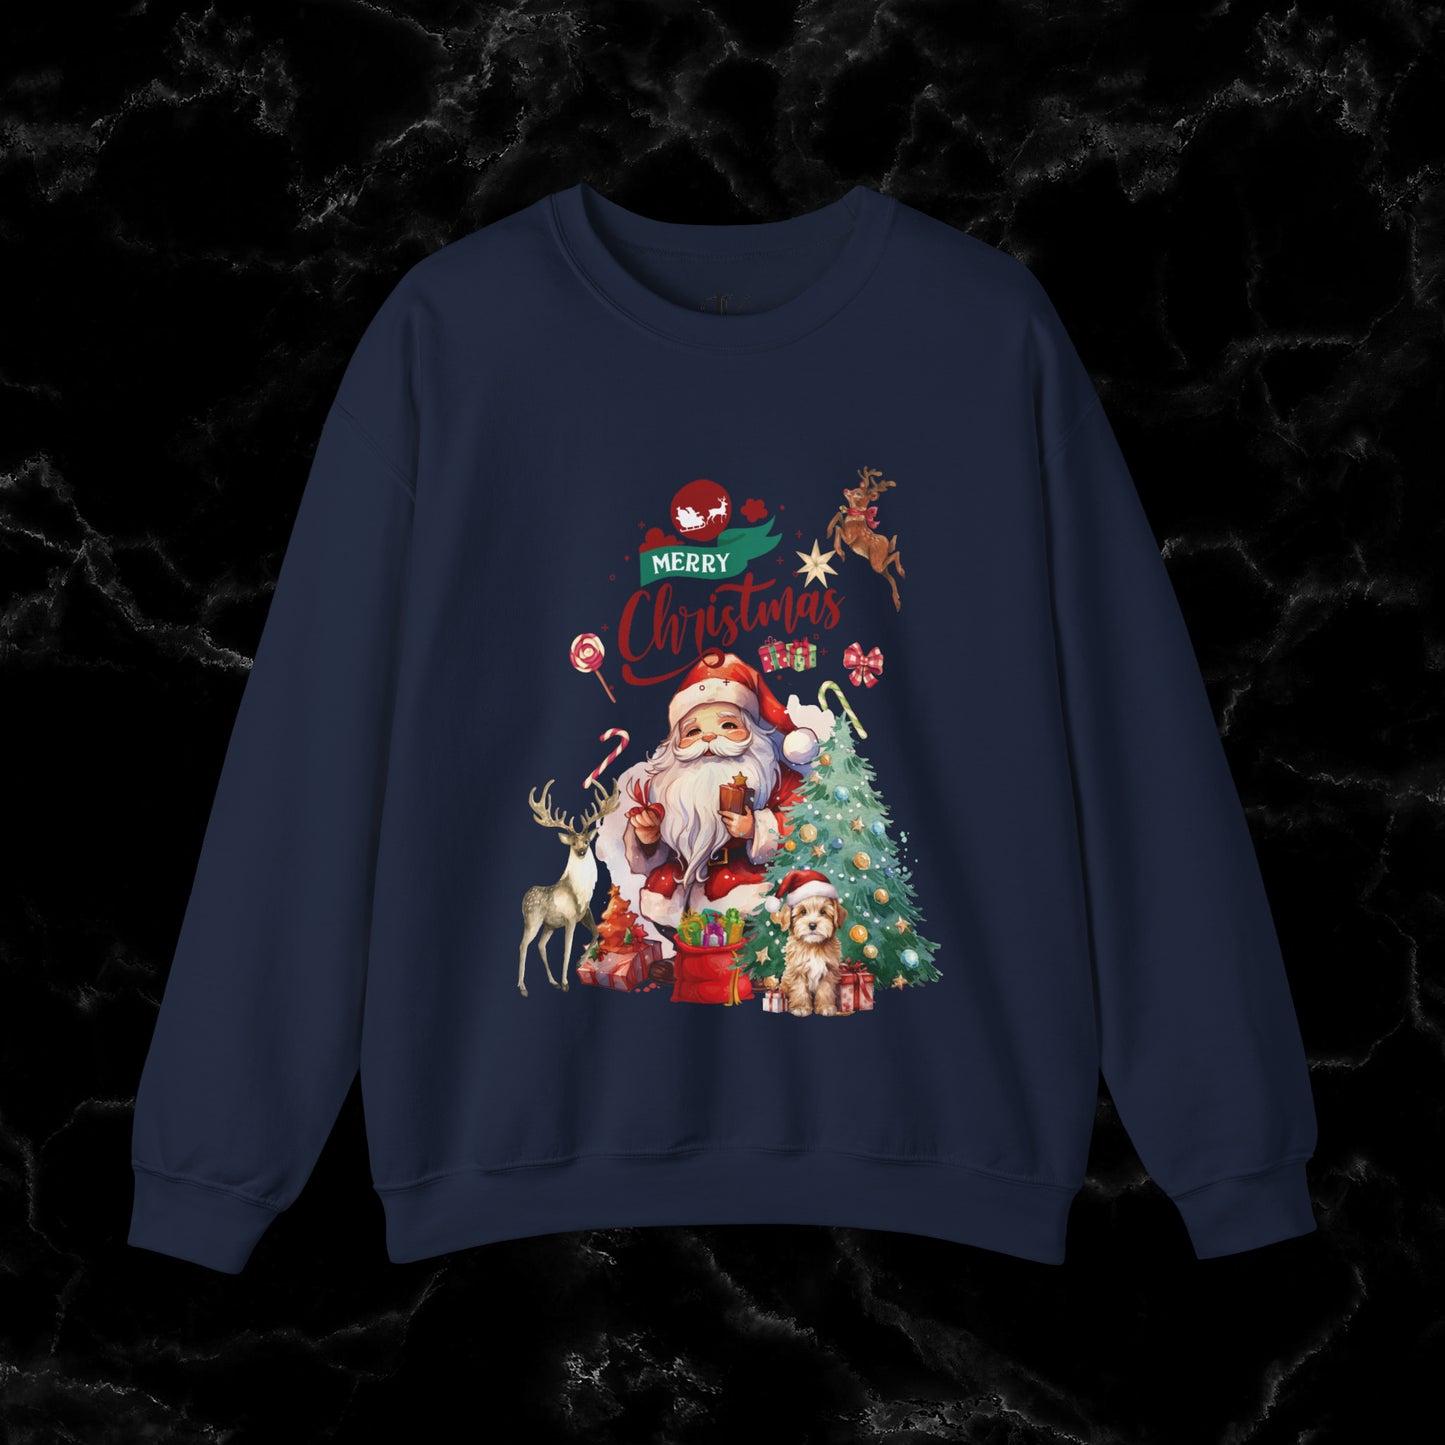 Merry Christmas Sweatshirt | Christmas Shirt - Matching Christmas Shirt - Santa Claus Merry Christmas Sweatshirt - Holiday Gift - Christmas Gift Sweatshirt S Navy 